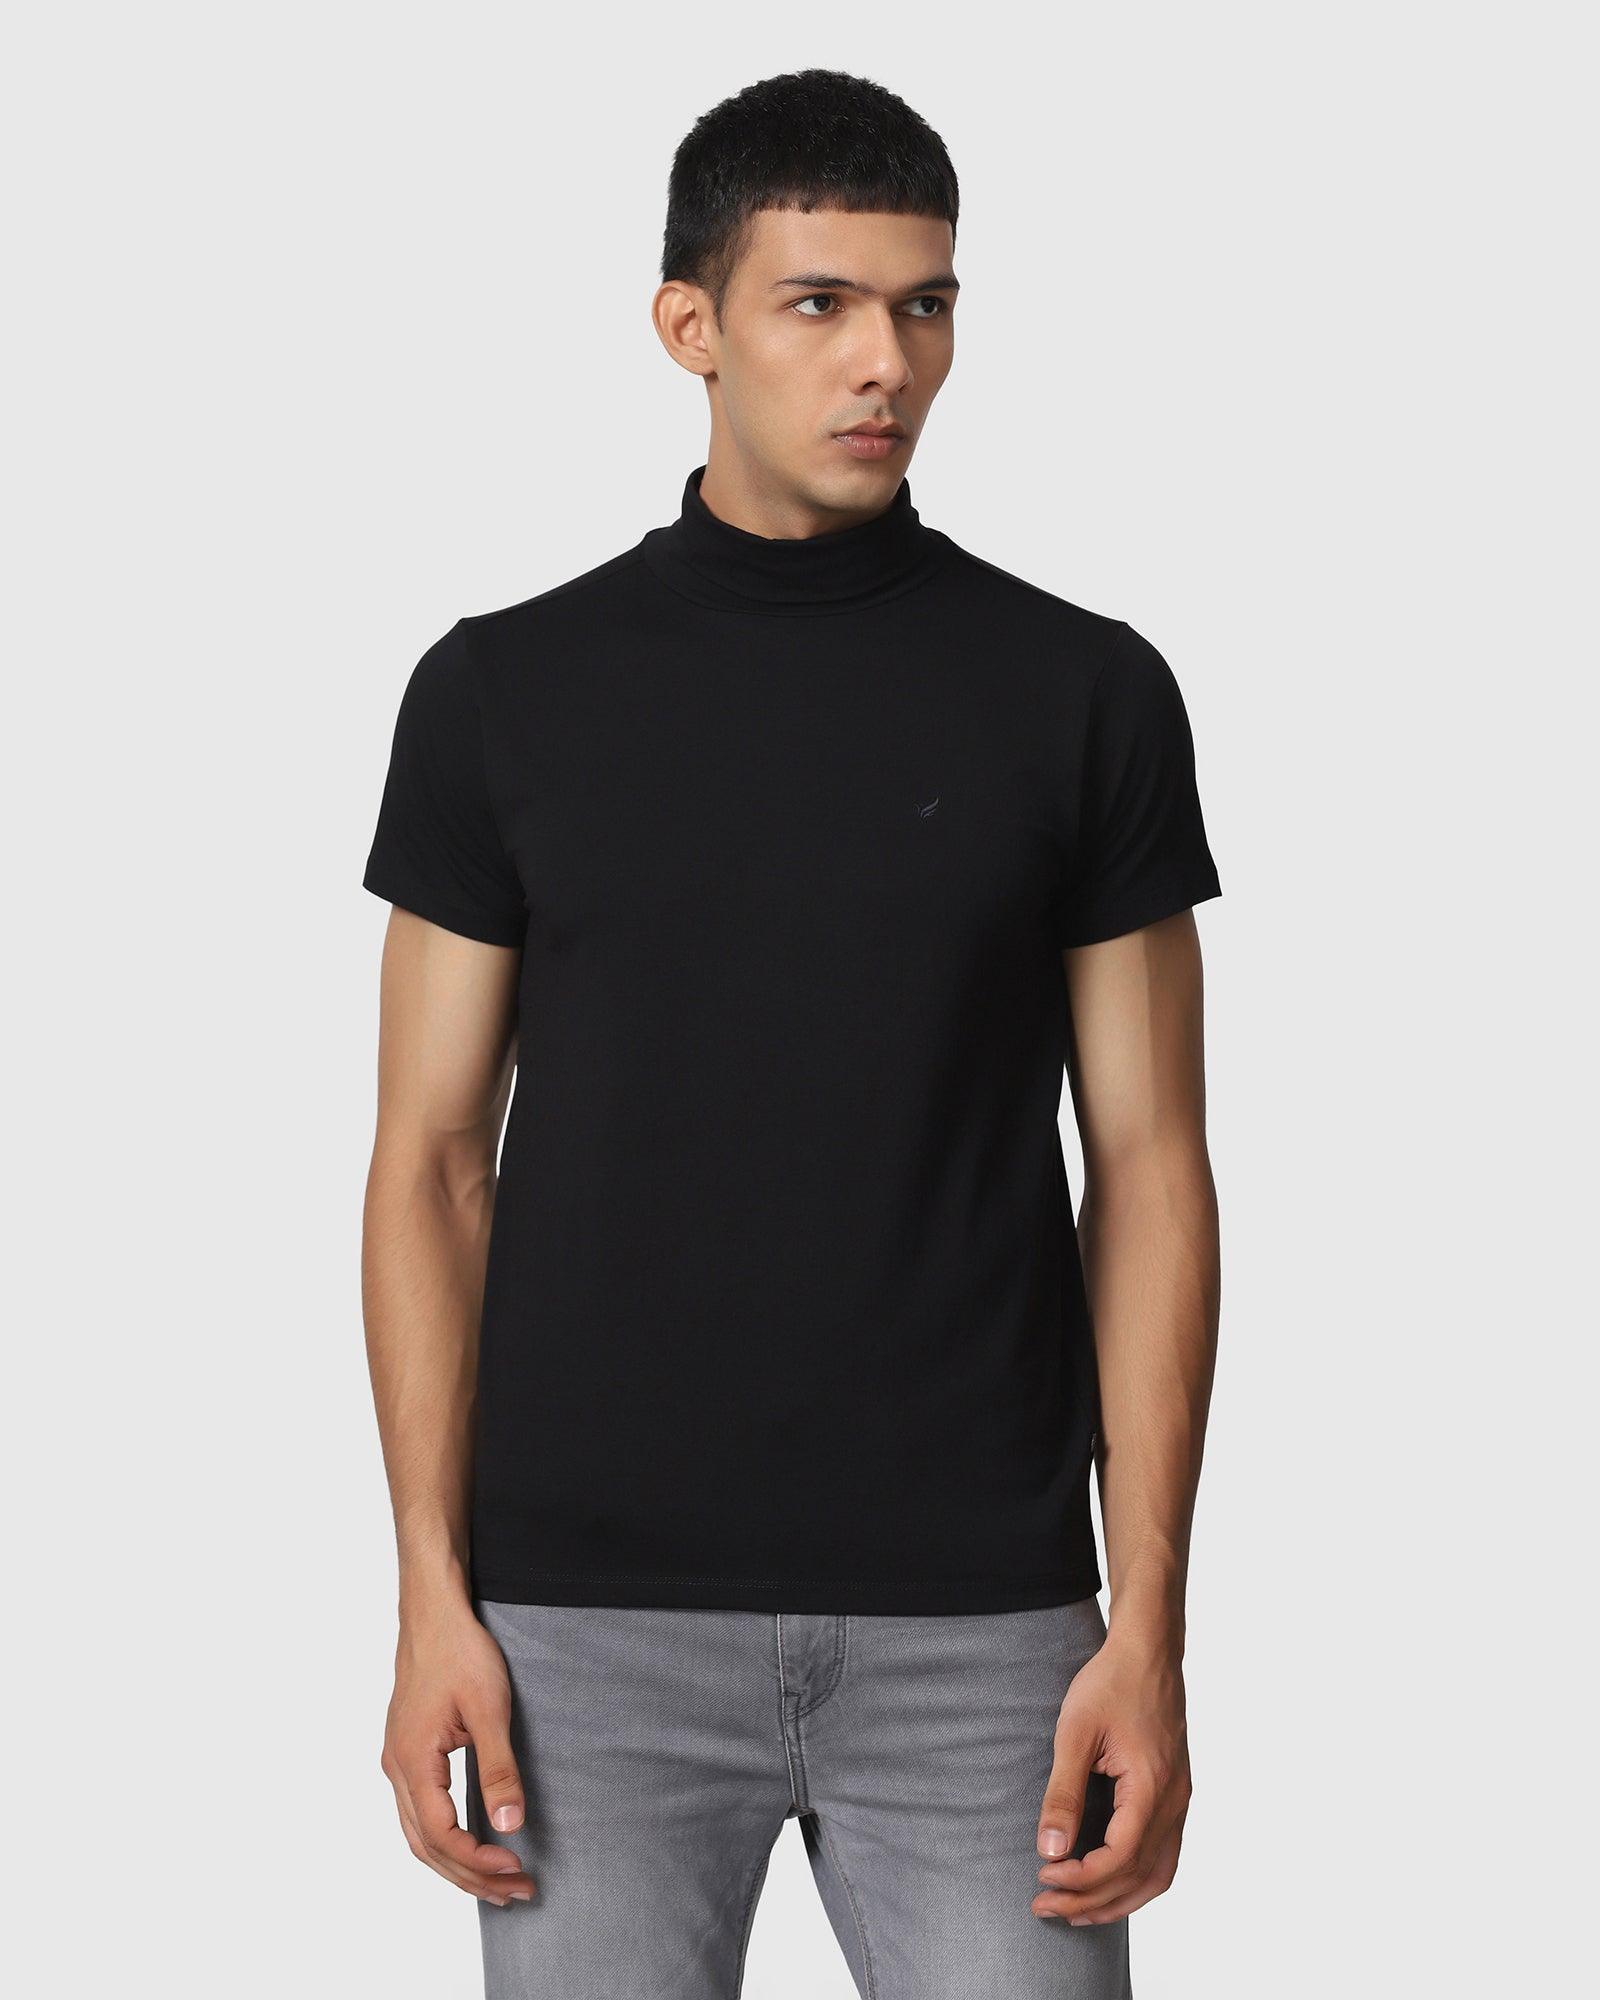 Solid Black Turtle Neck T-Shirt